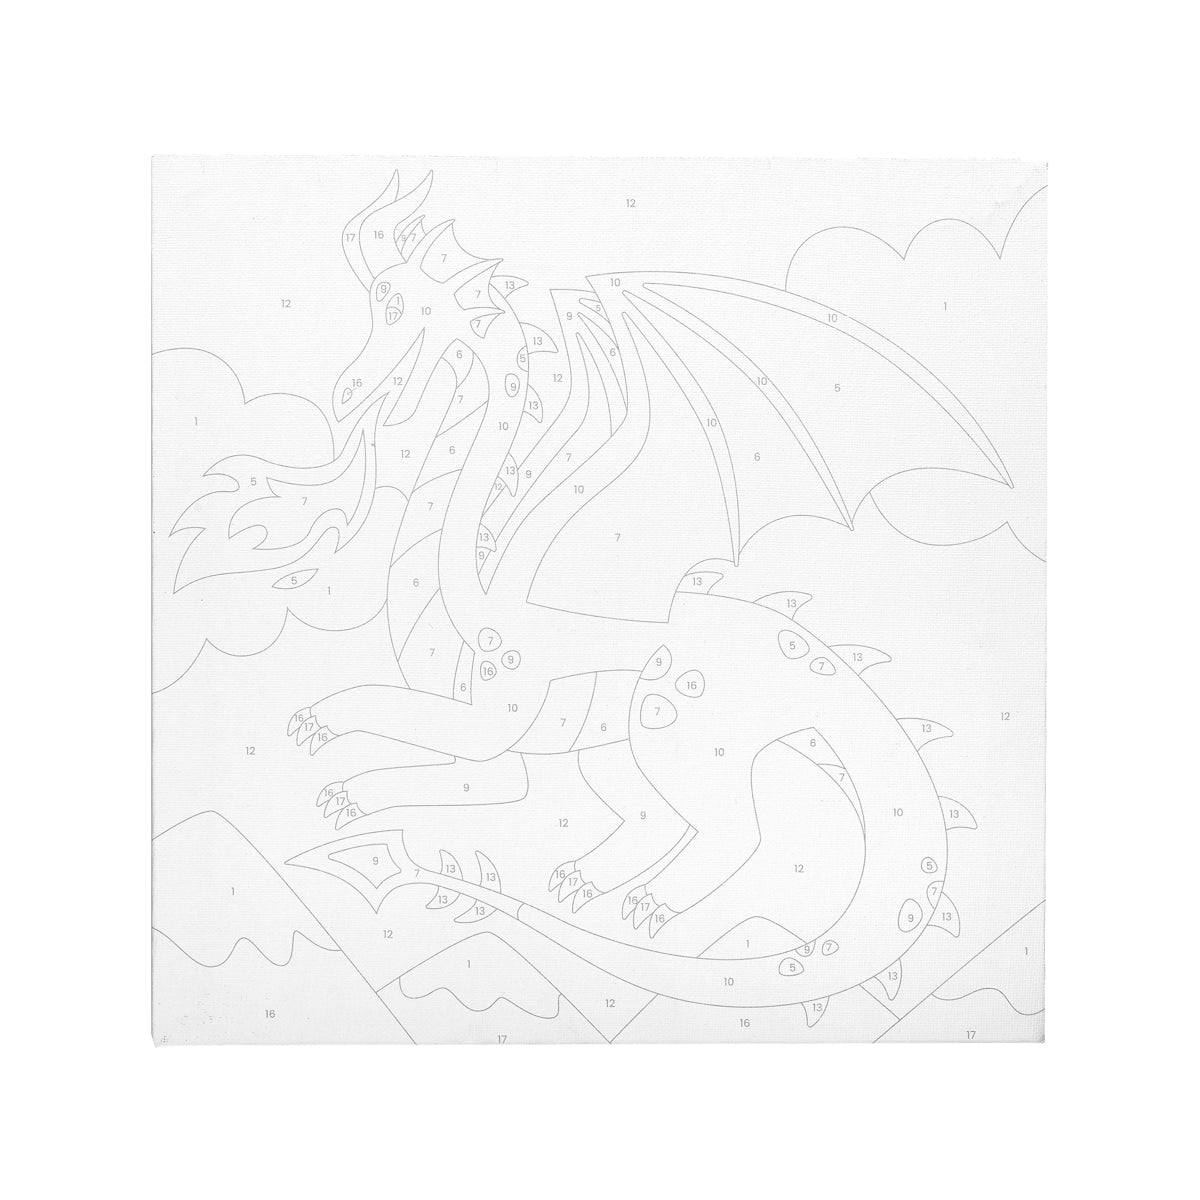 Ooly Colorific Canvas Malen nach Zahlen Kit - Fantastic Dragon